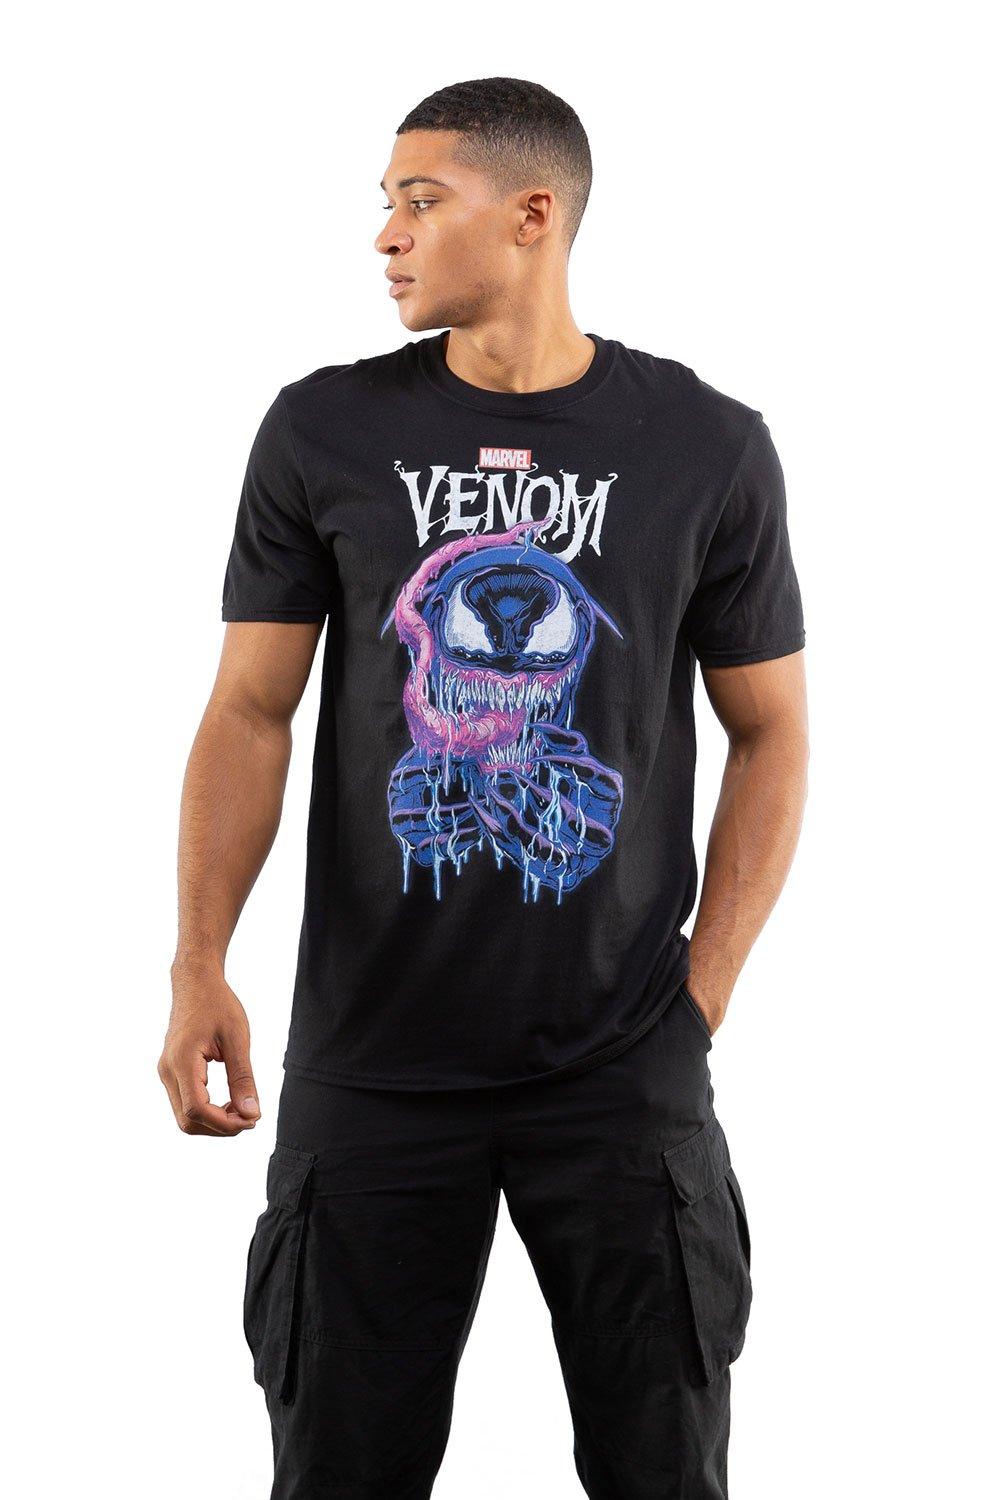 Хлопковая футболка Venom Grin Marvel, черный хлопковая футболка venom antihero marvel черный